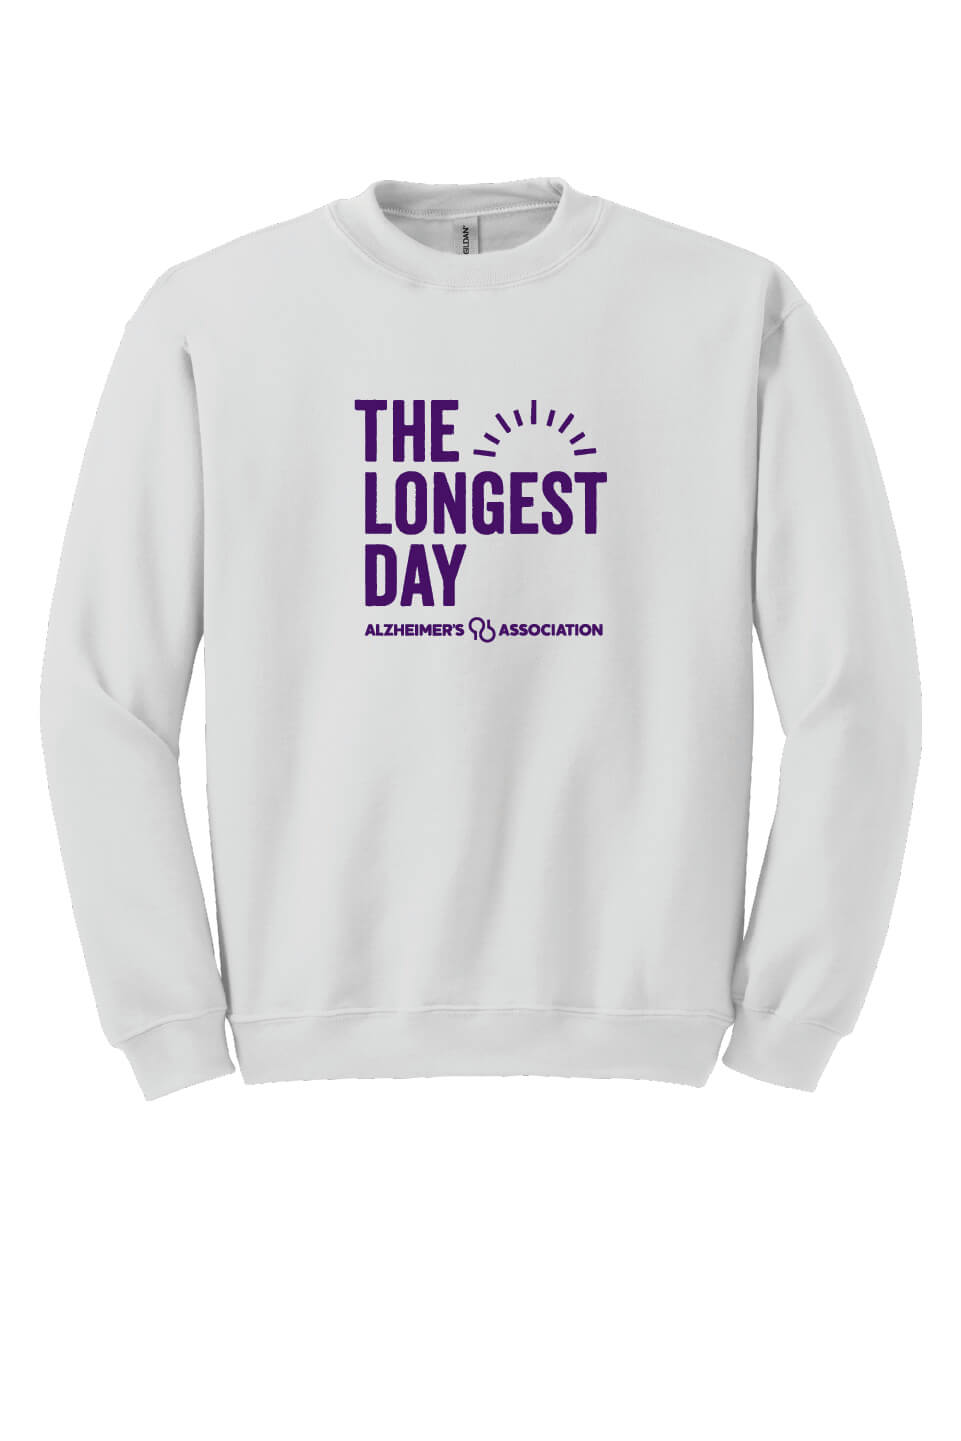 The Longest Day Crewneck Sweatshirt vertical white